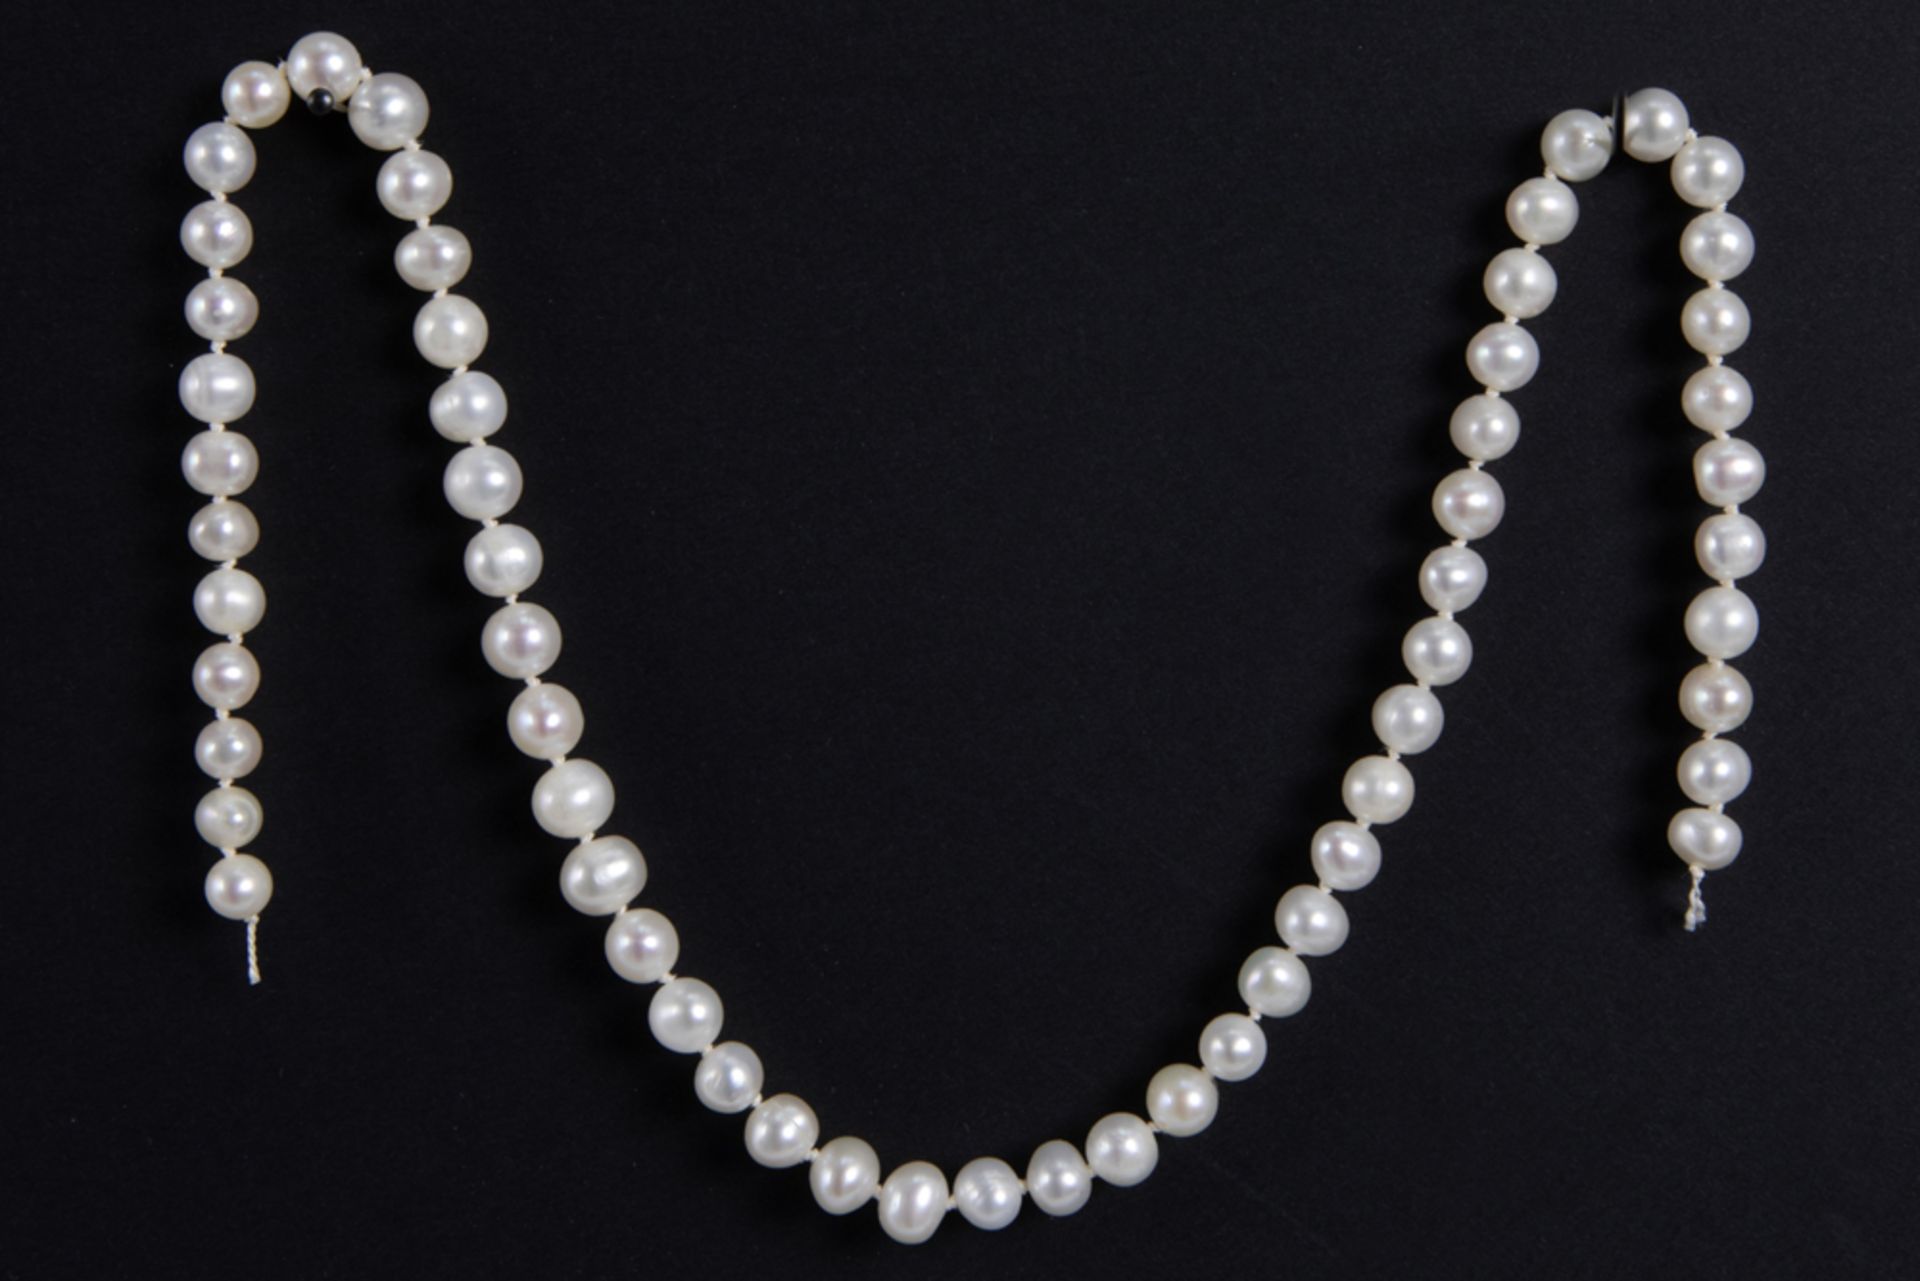 string of pearls with the same color and size || Snoer van op de kleur en grootte gezocht parels -